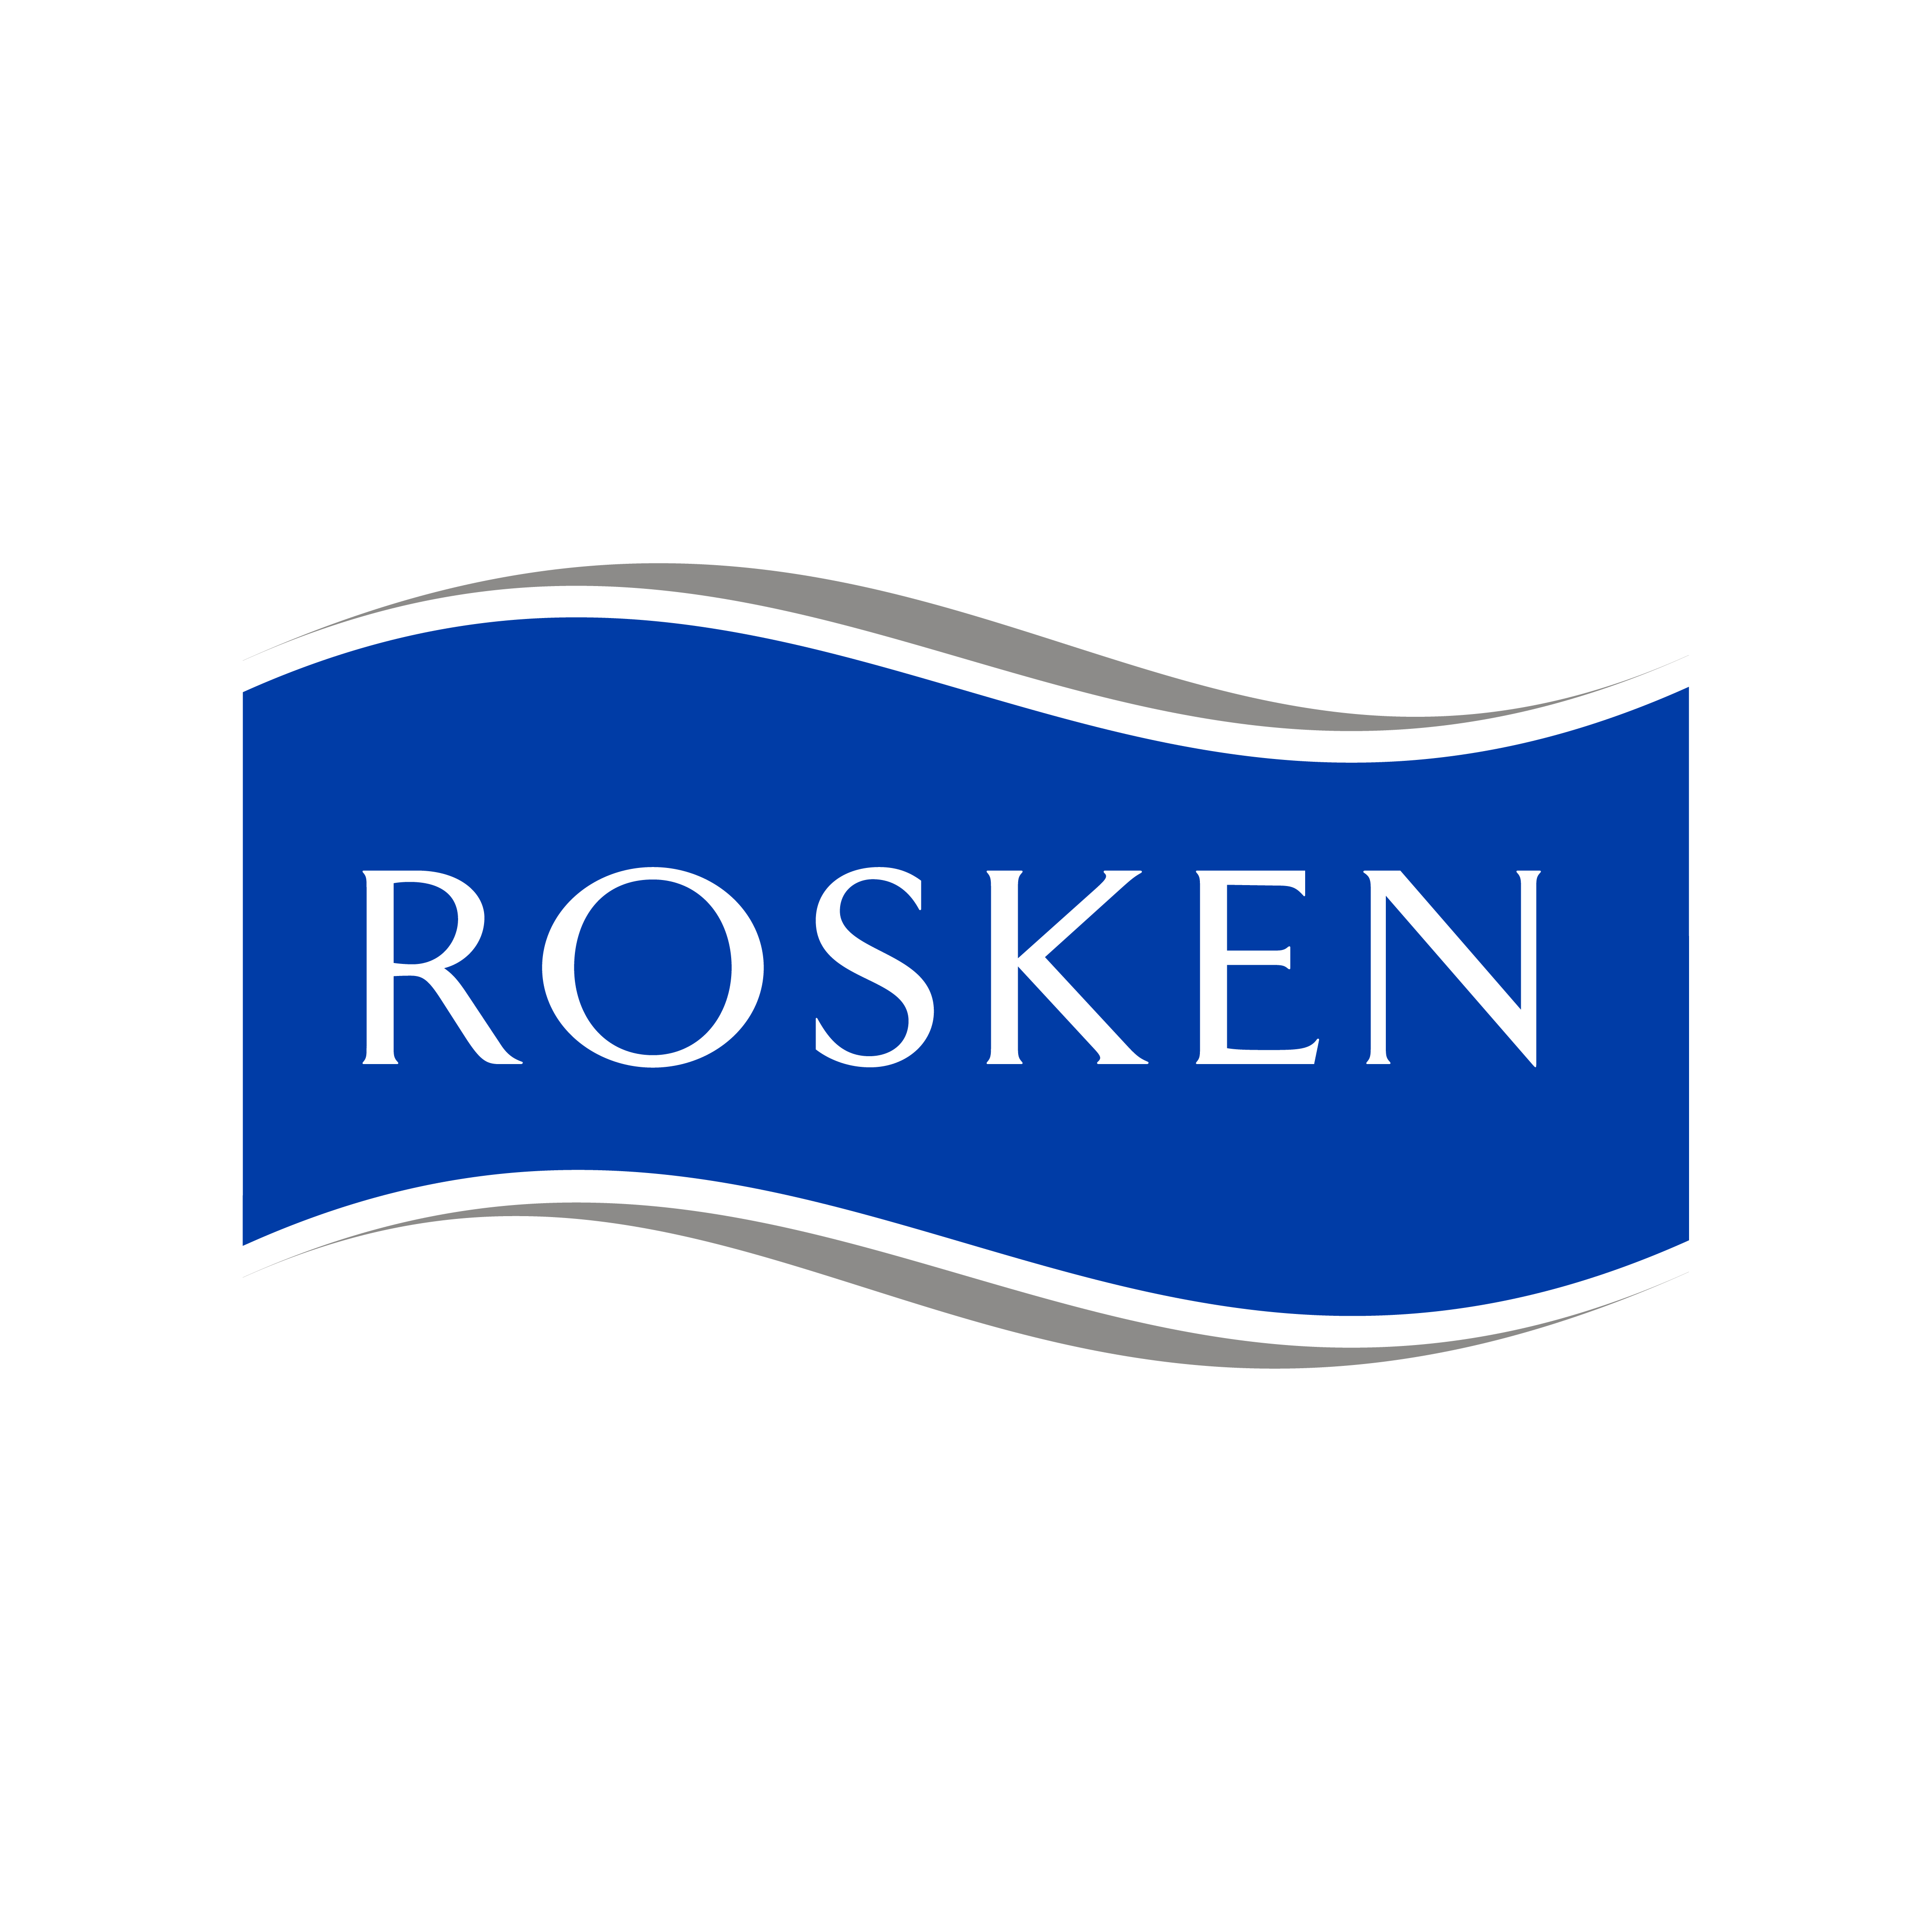 Rosken logo